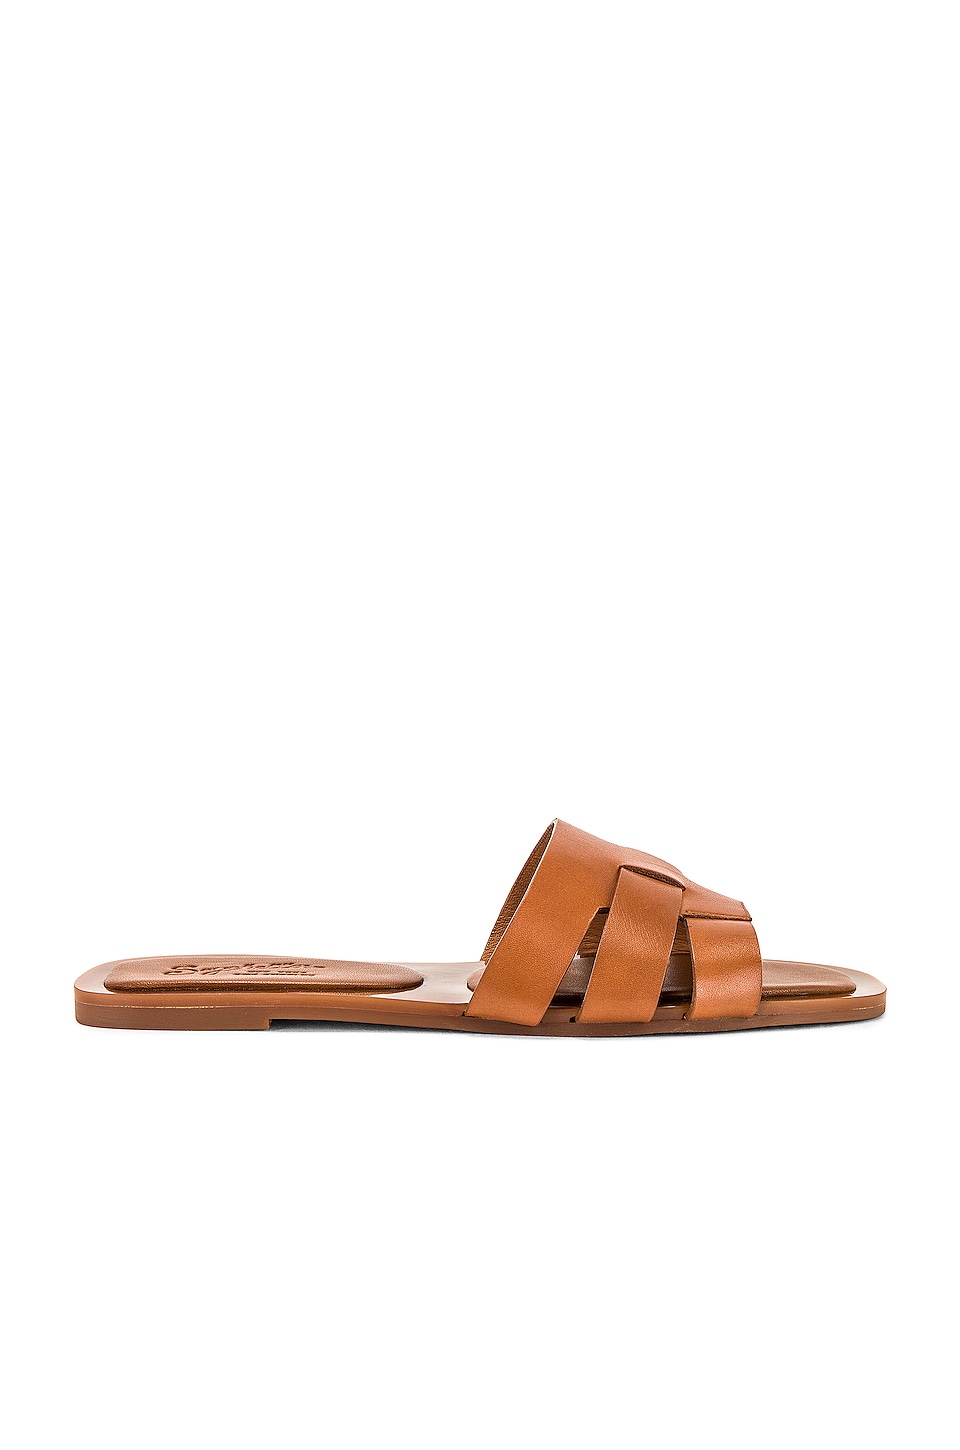 Seychelles Practically Sandal in Tan Leather | REVOLVE